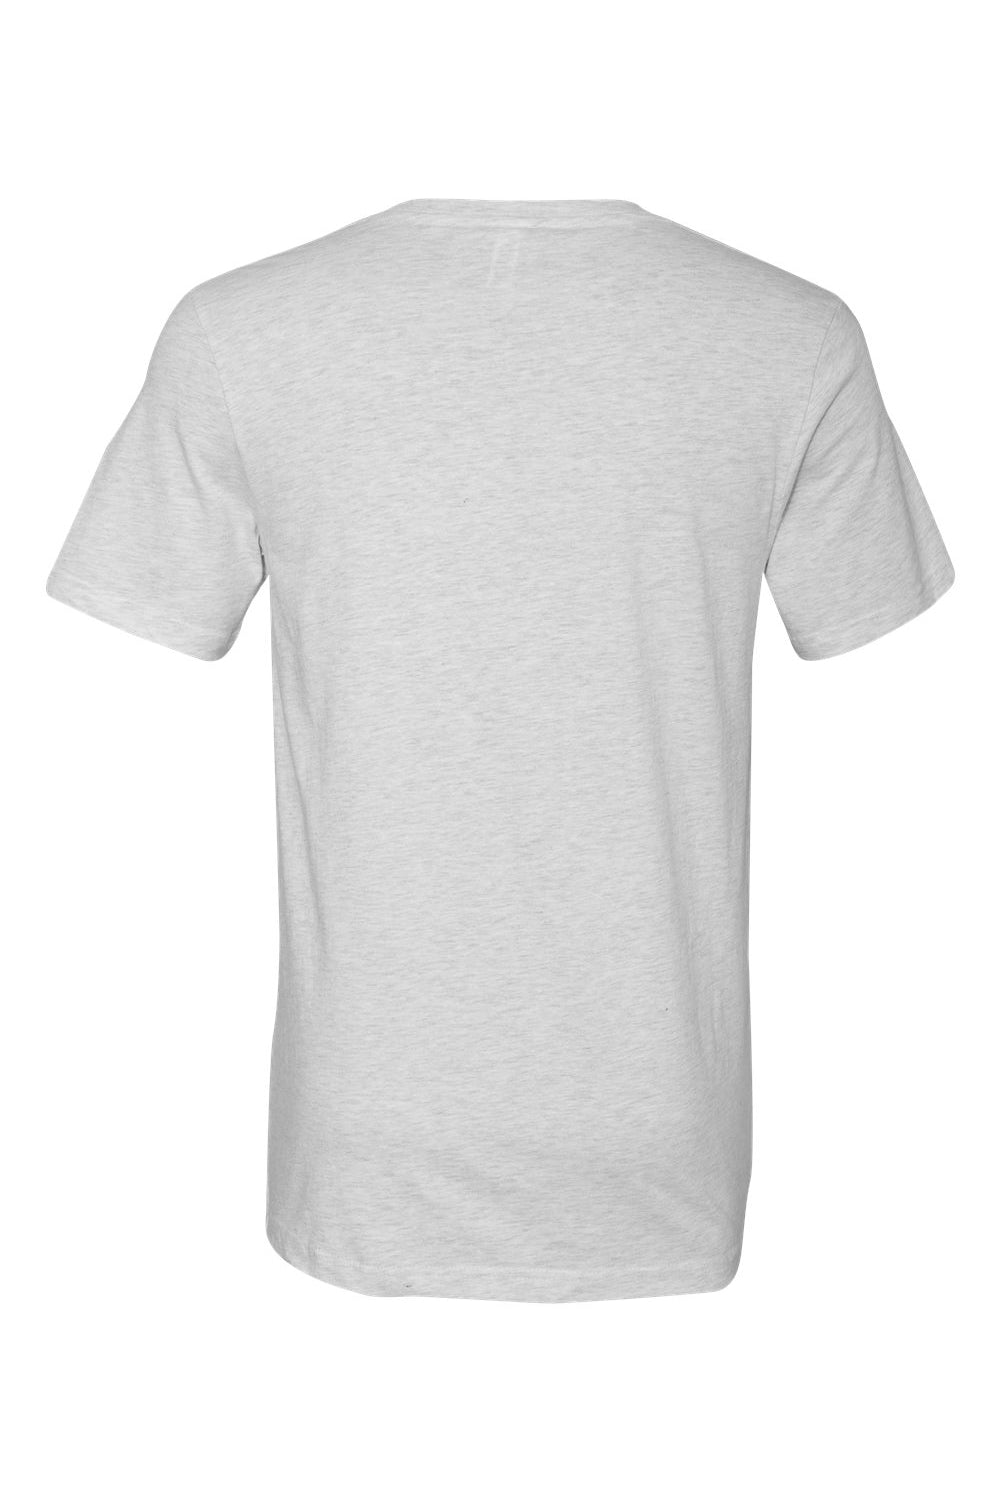 Bella + Canvas BC3005/3005/3655C Mens Jersey Short Sleeve V-Neck T-Shirt Ash Grey Flat Back